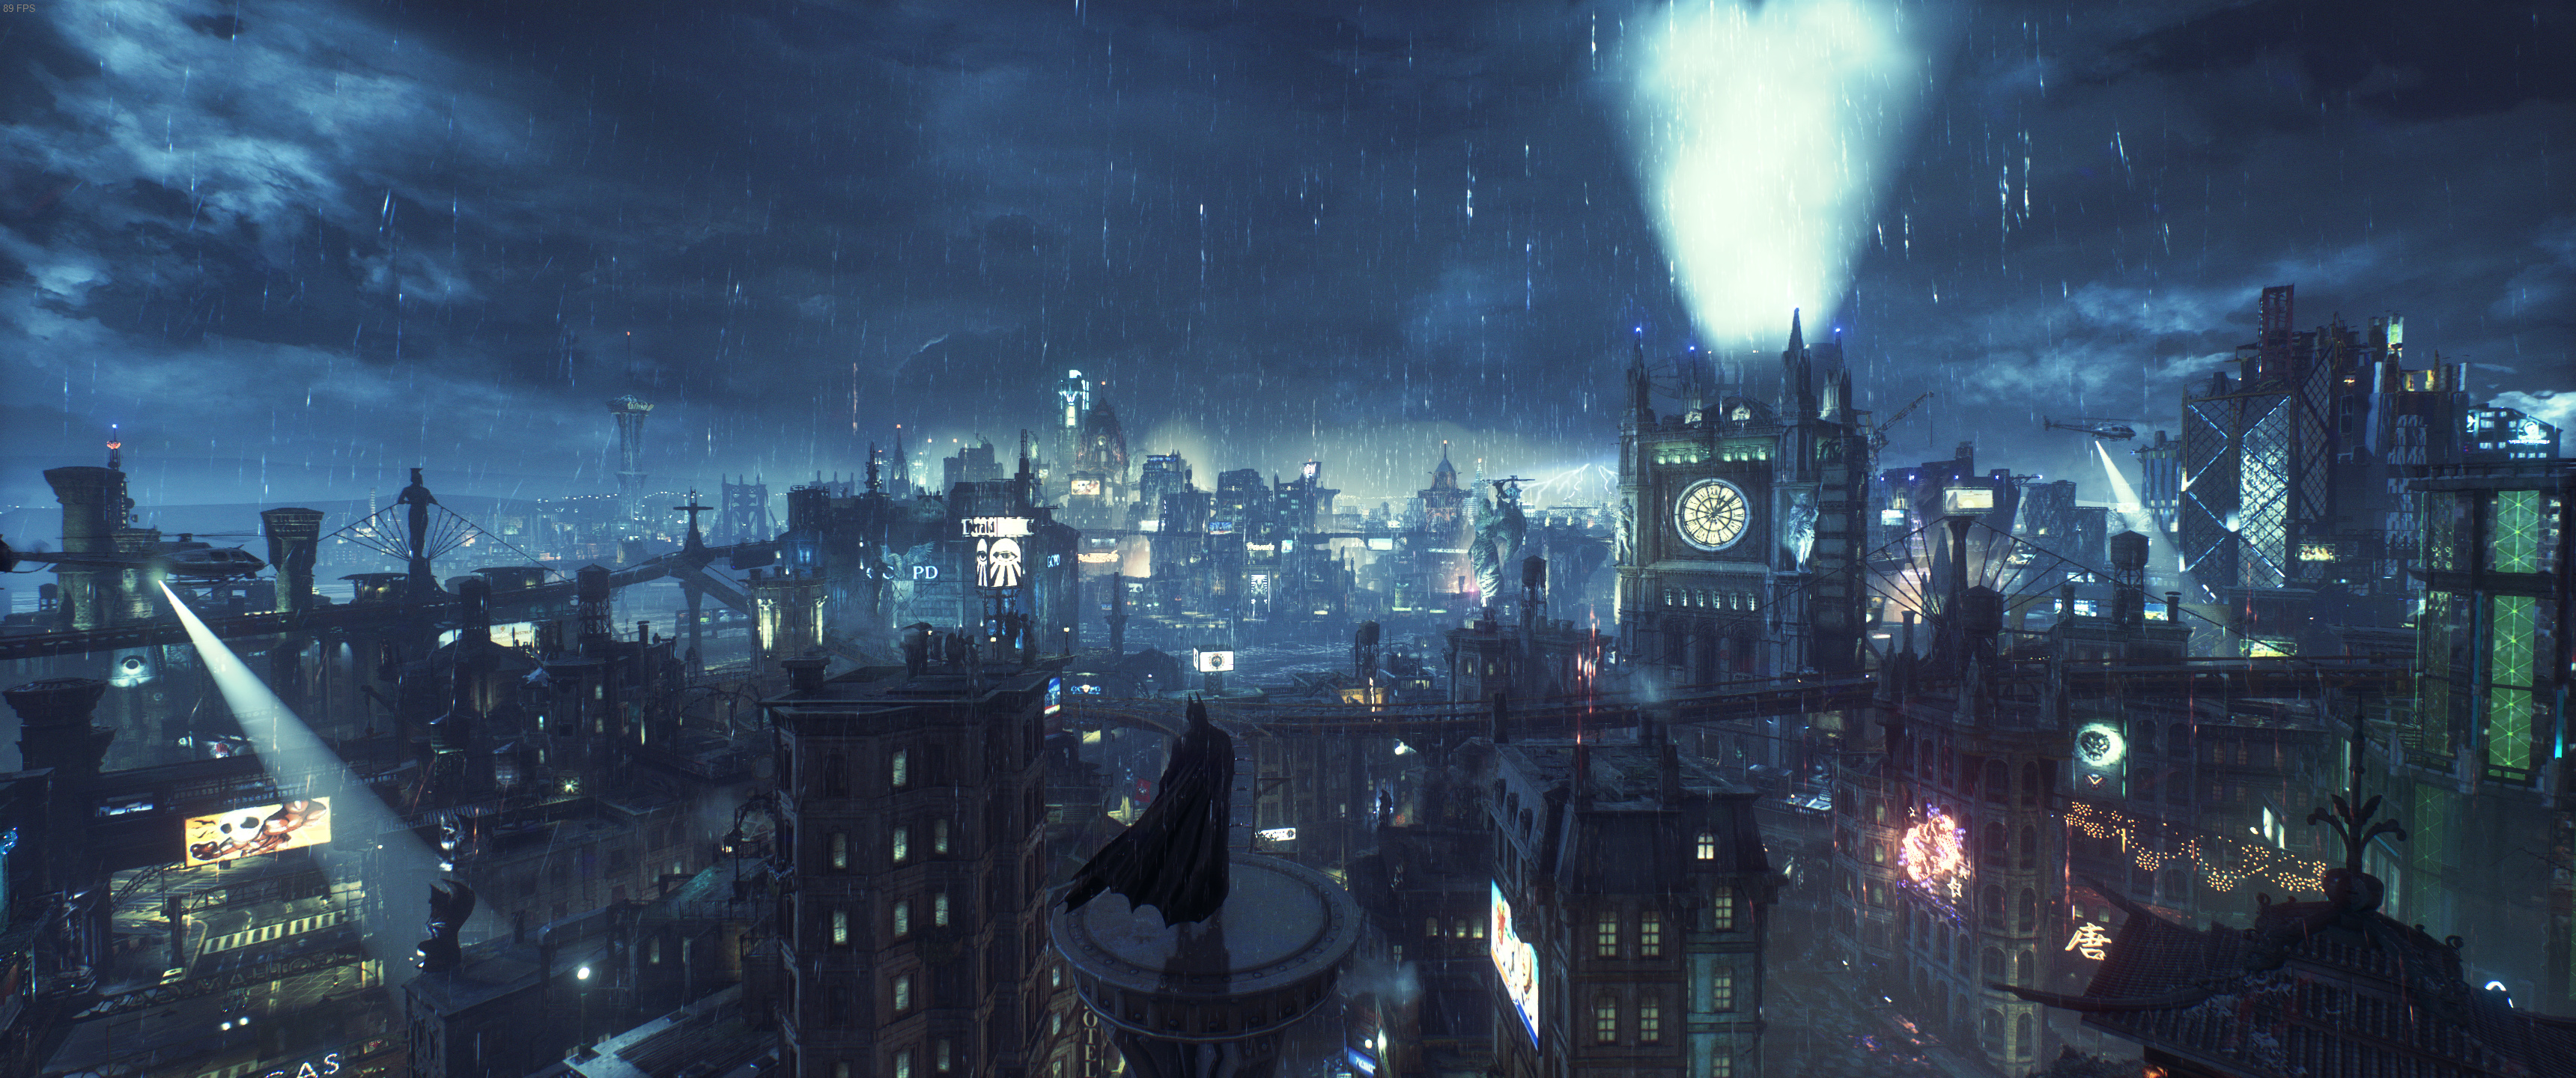 Gotham skyline, Urban wallpapers, 3440x1440 Dual Screen Desktop